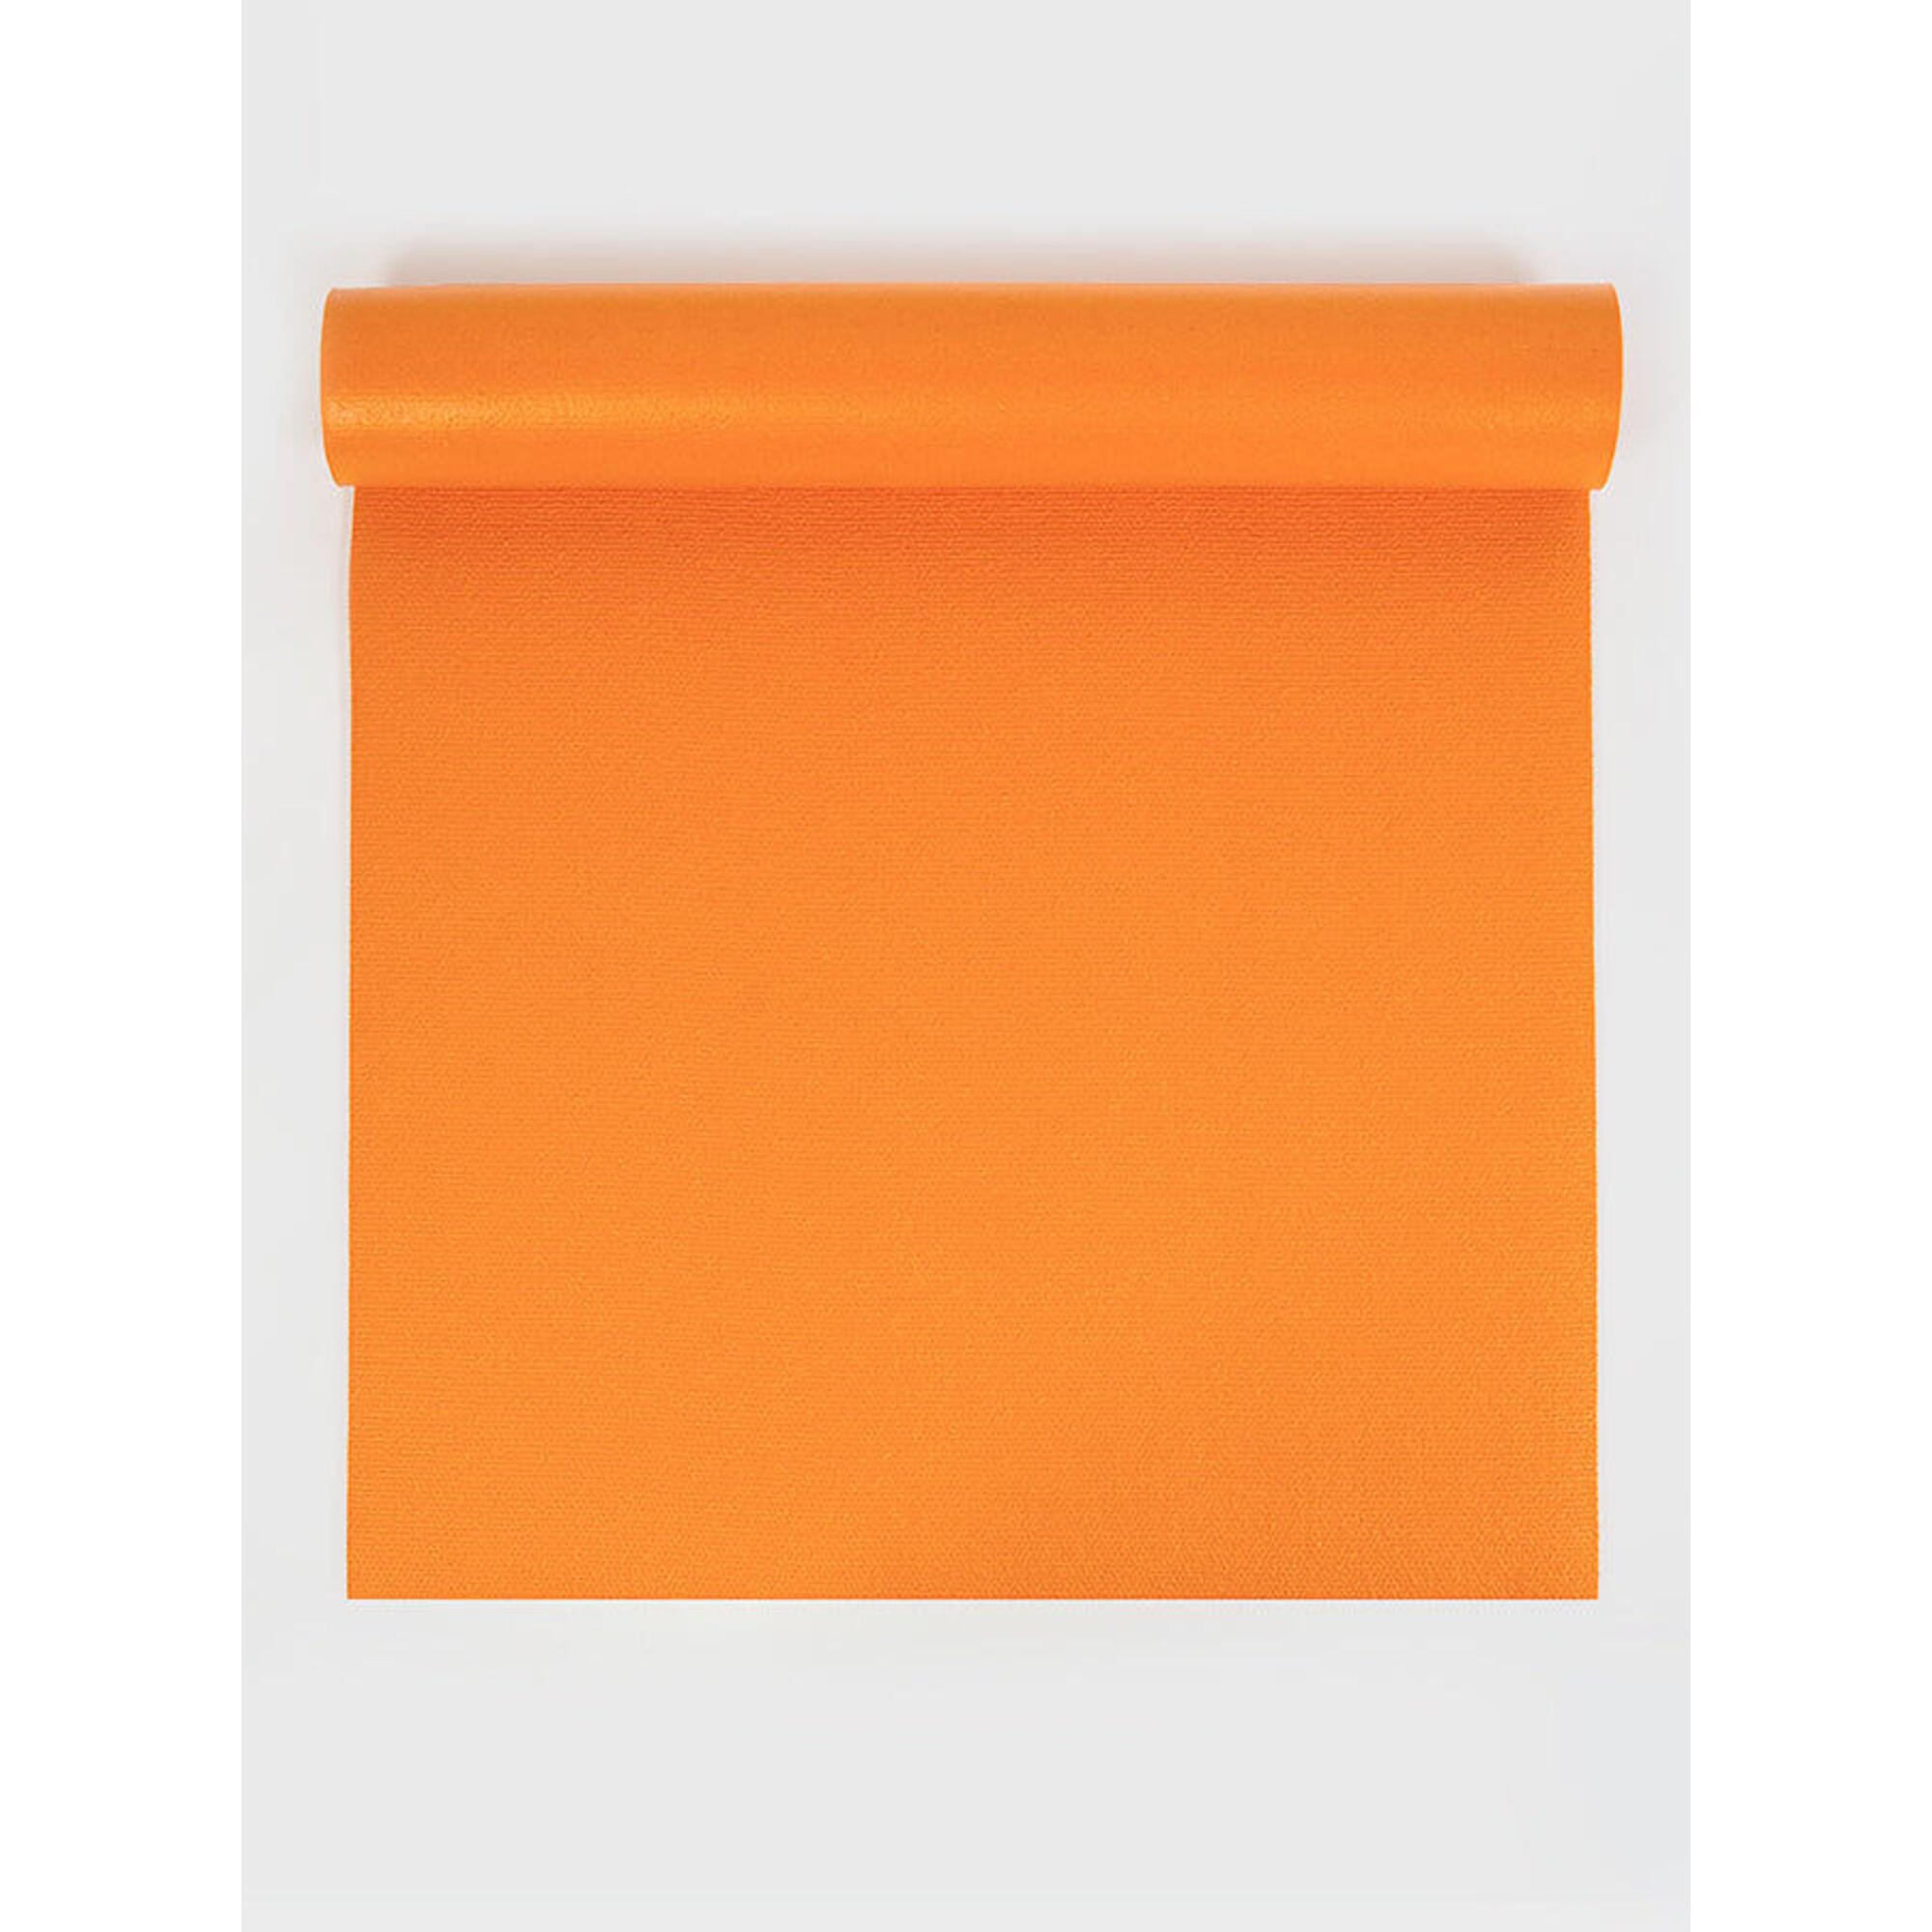 Yoga Studio Oeko-Tex Original Sticky Yoga Mat 4.5mm - Tangerine Orange 1/4